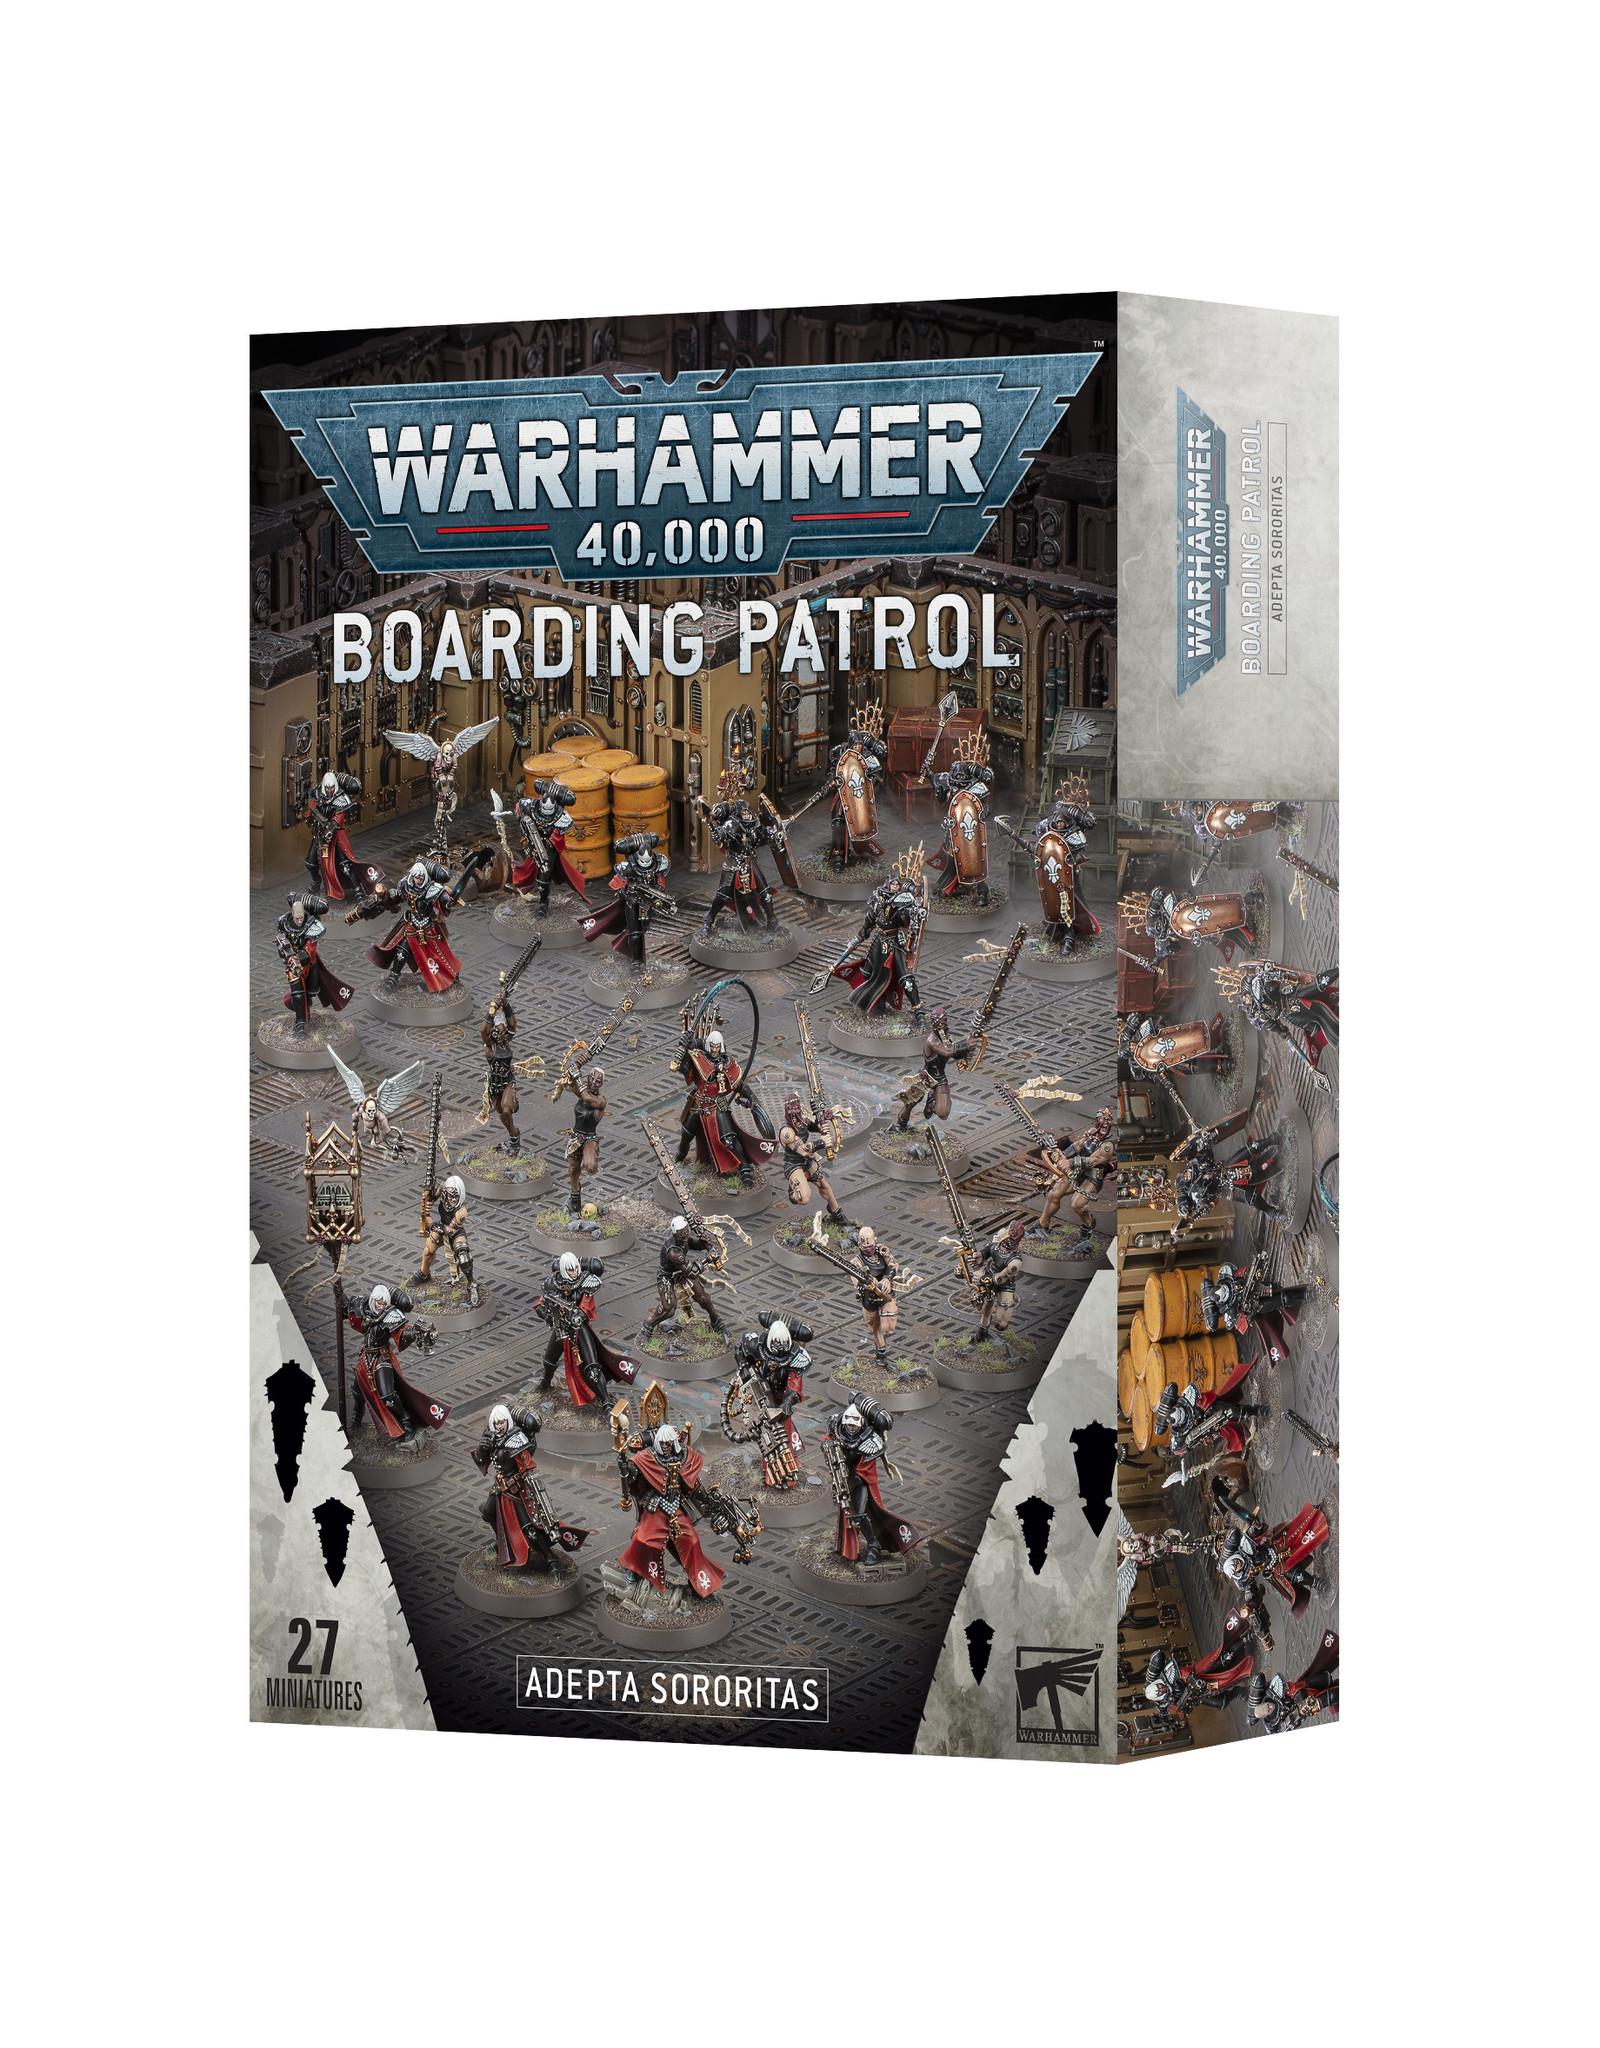 Warhammer 40K Boarding Patrol: Adepta Sororitas